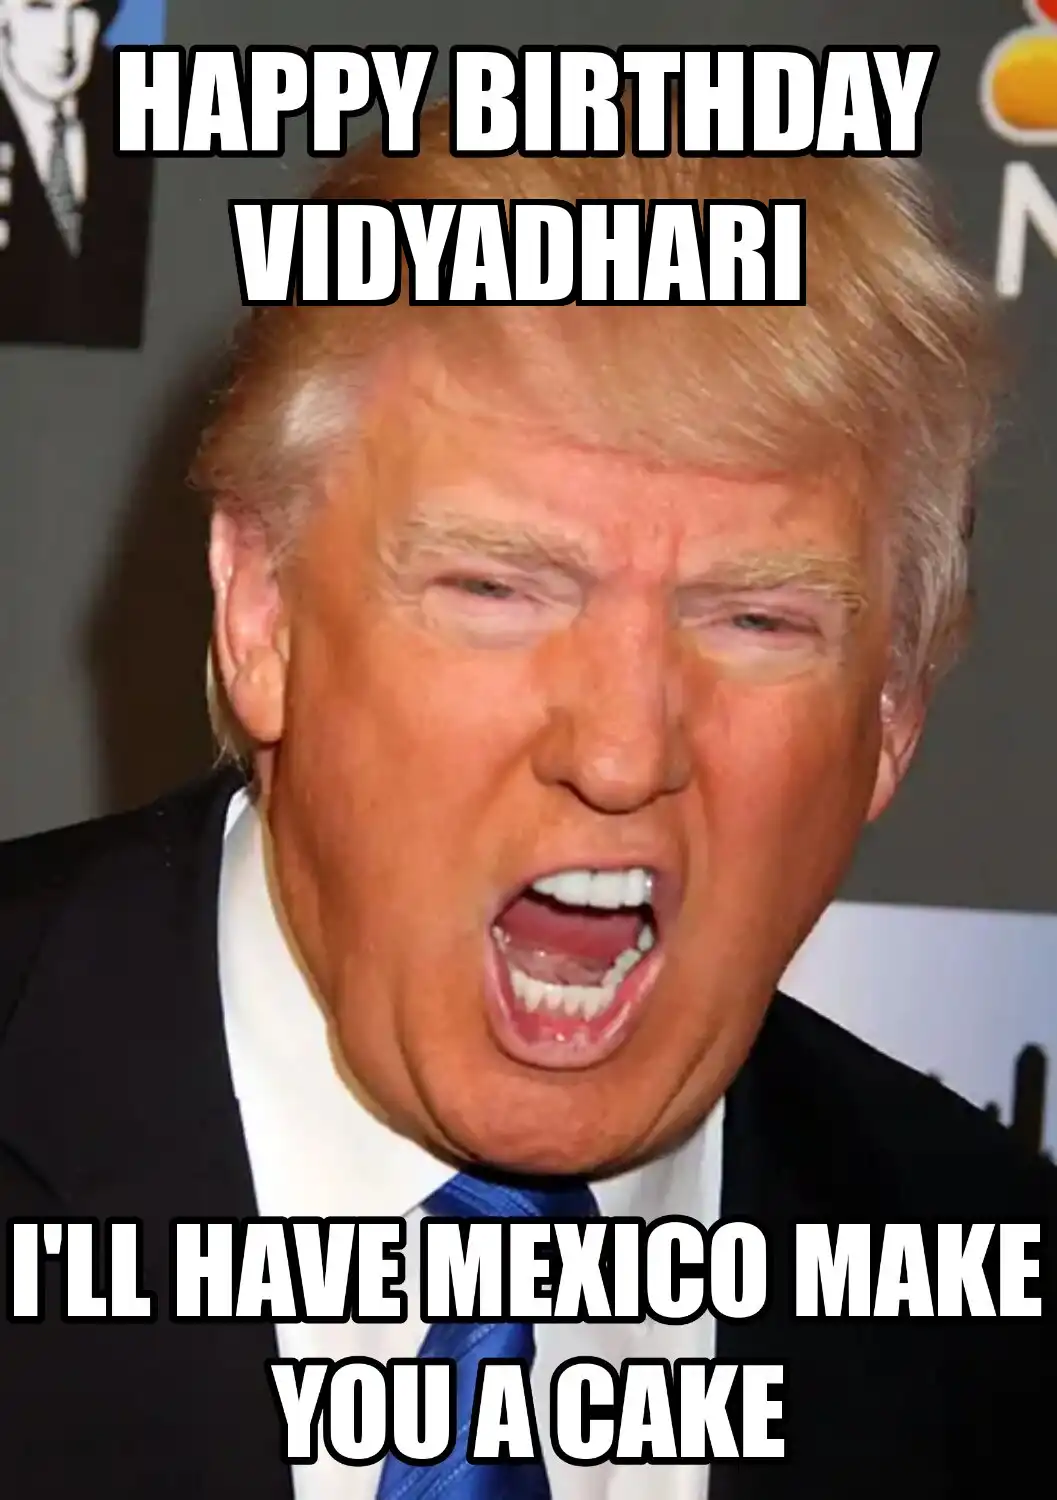 Happy Birthday Vidyadhari Mexico Make You A Cake Meme